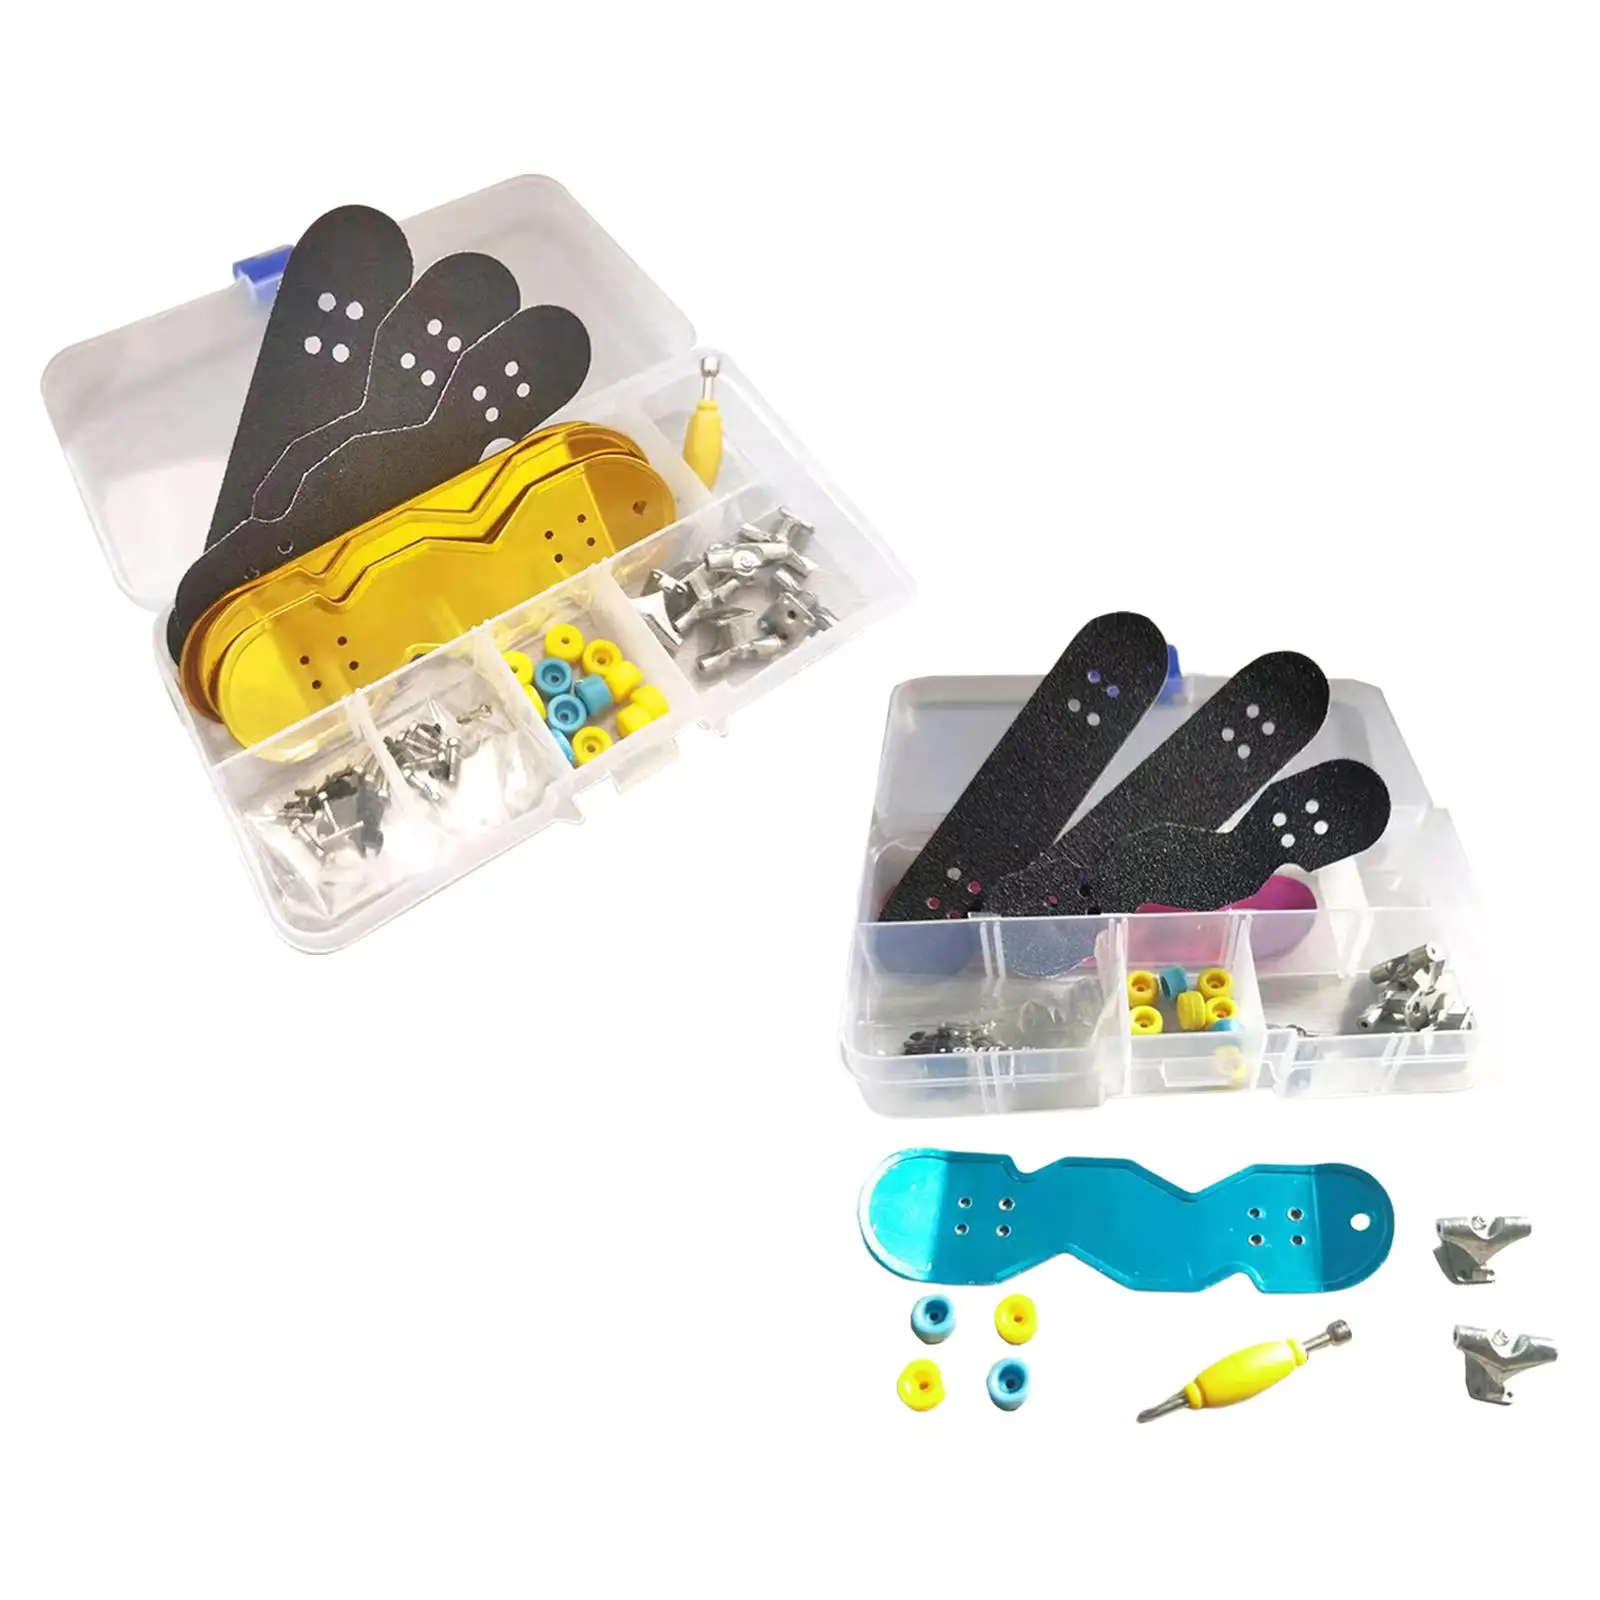 Professional mini size finger Skating Board mini size   Finger Skate Repair Tool Educational Gifts